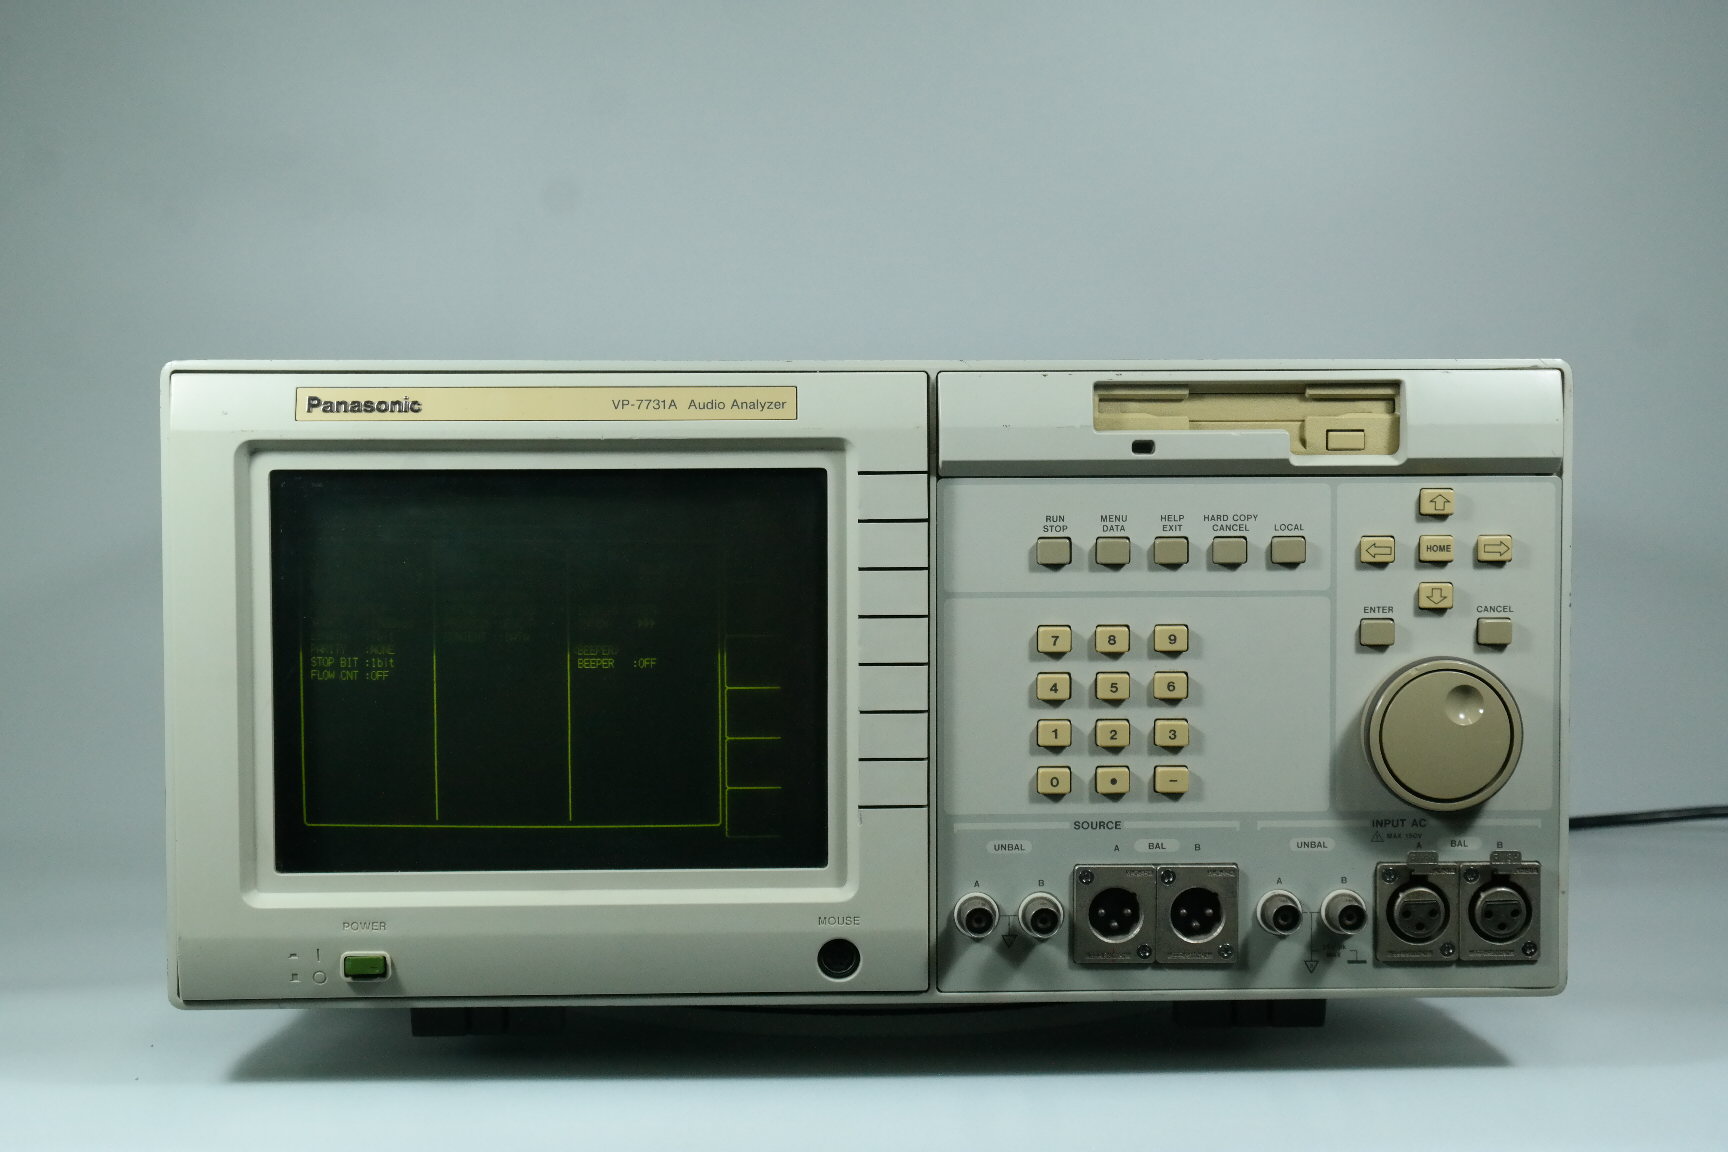 Panasonic/Audio Analyzer/VP-7731A